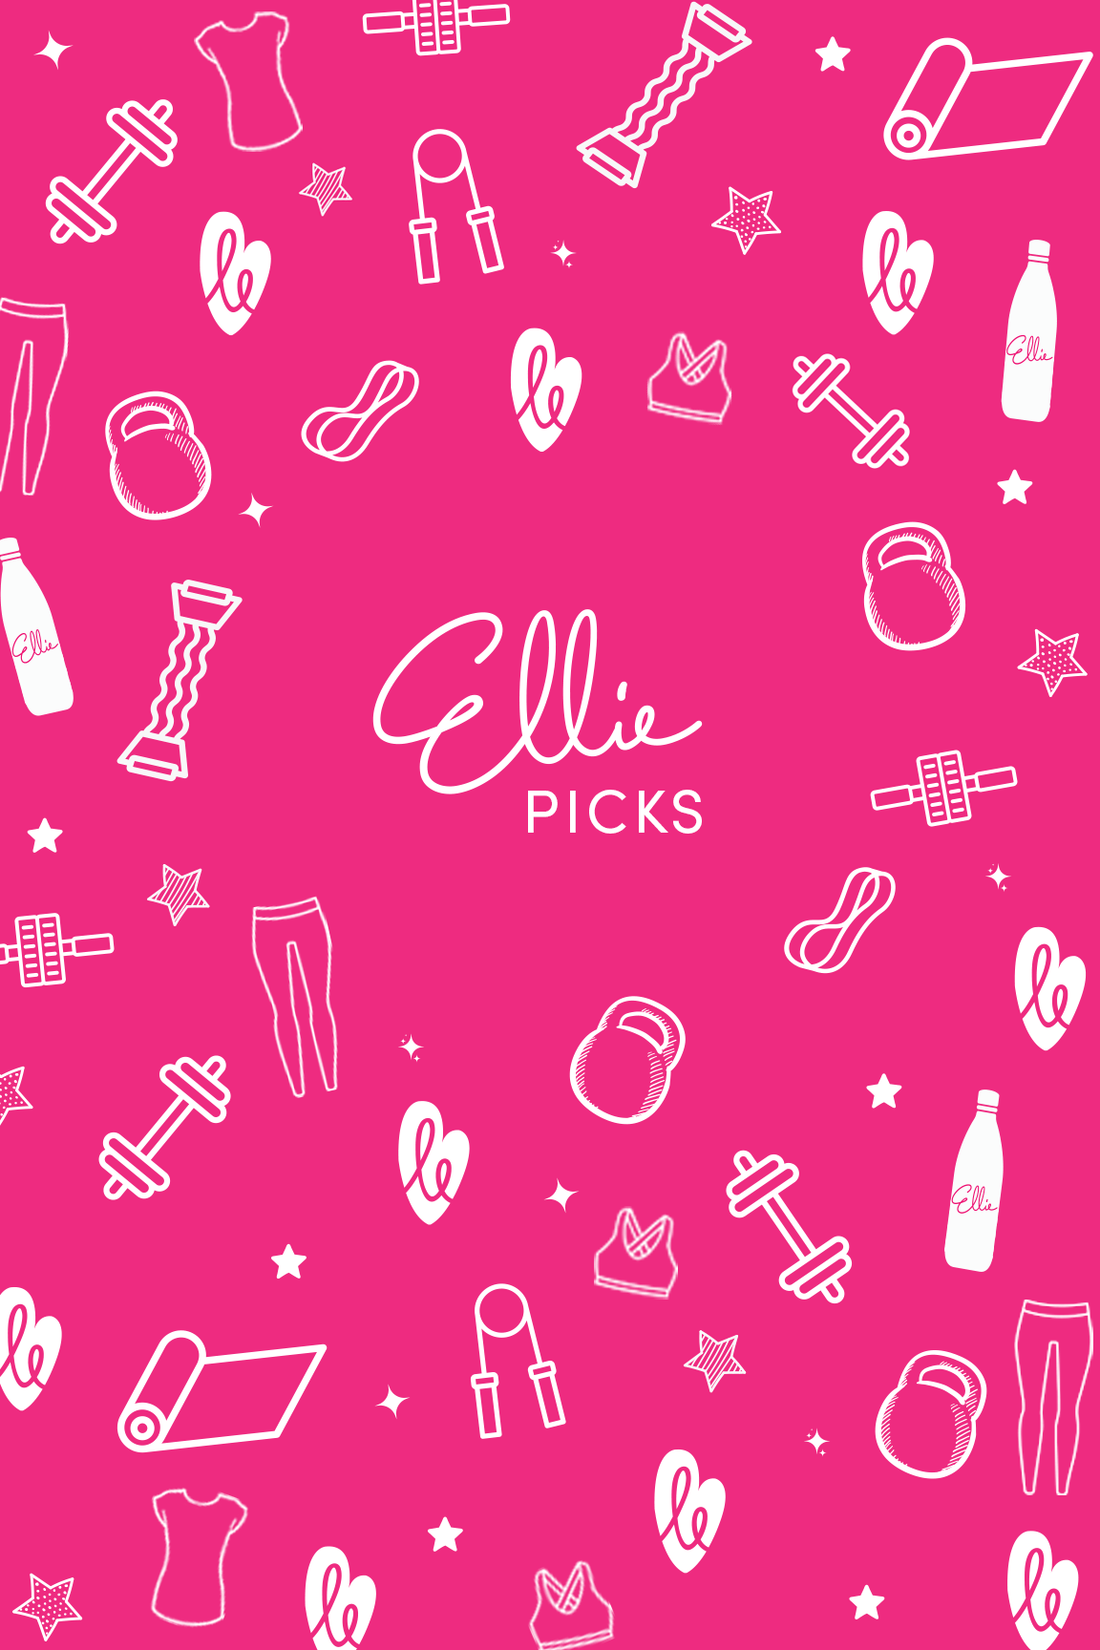 Ellie Picks - 5 Items